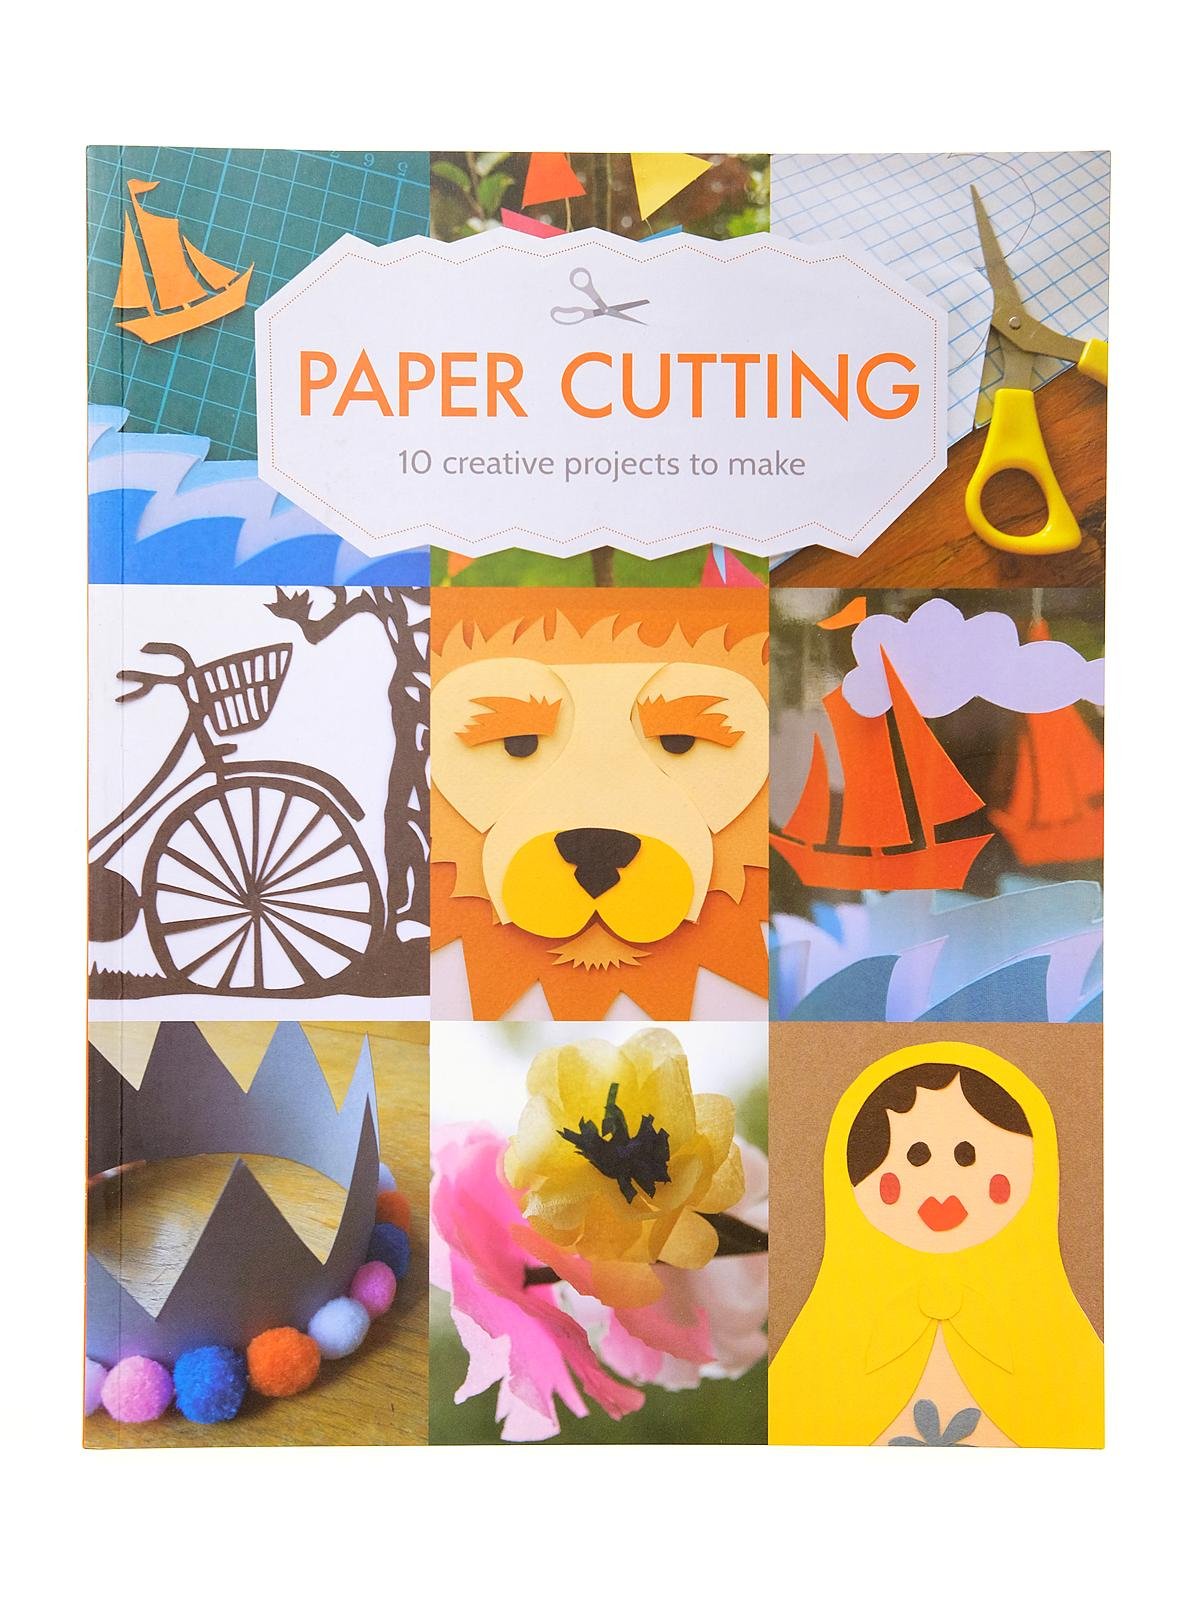 Guild of Master Craftsmen - Paper Cutting